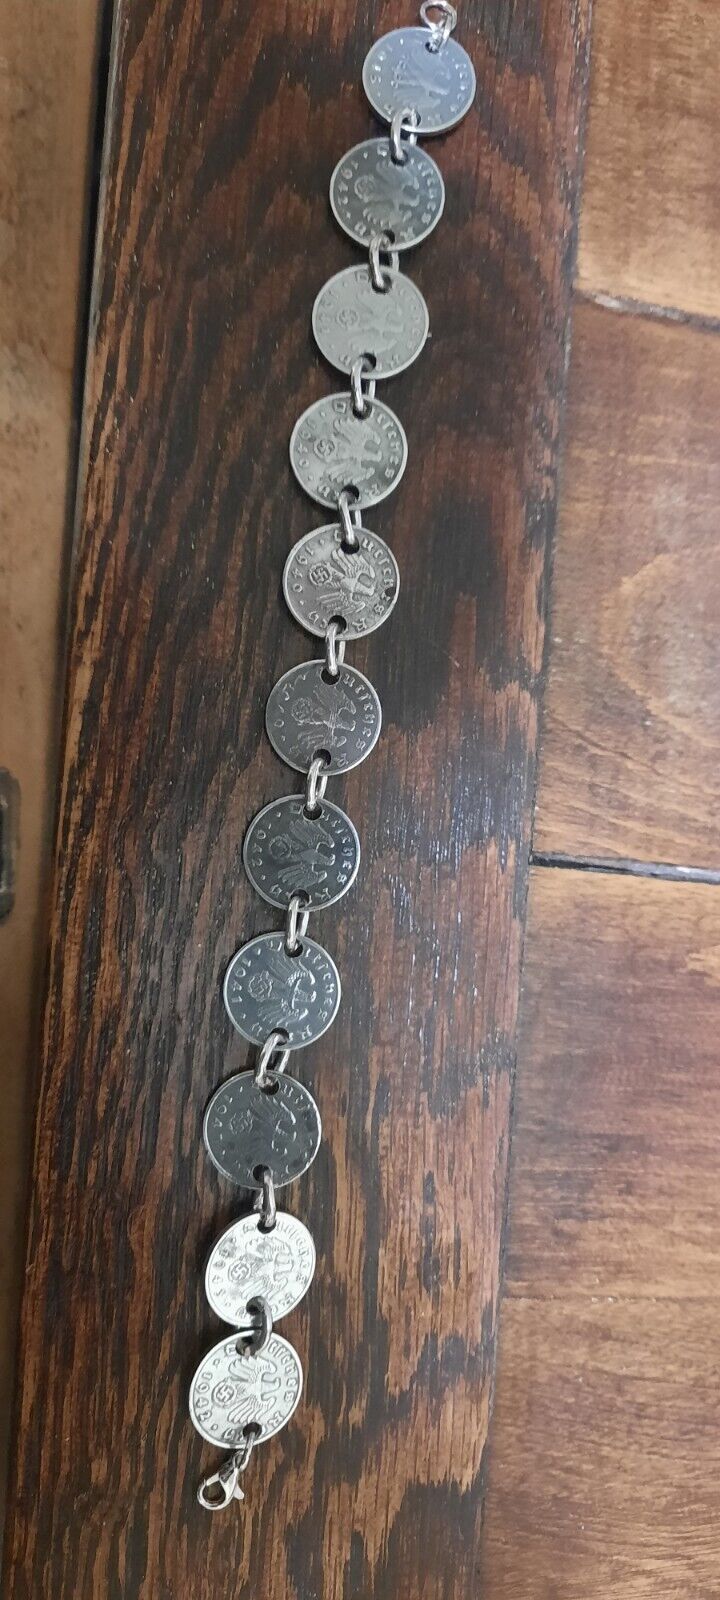 WW2 Original German Coins from the battlefield Bracelet 